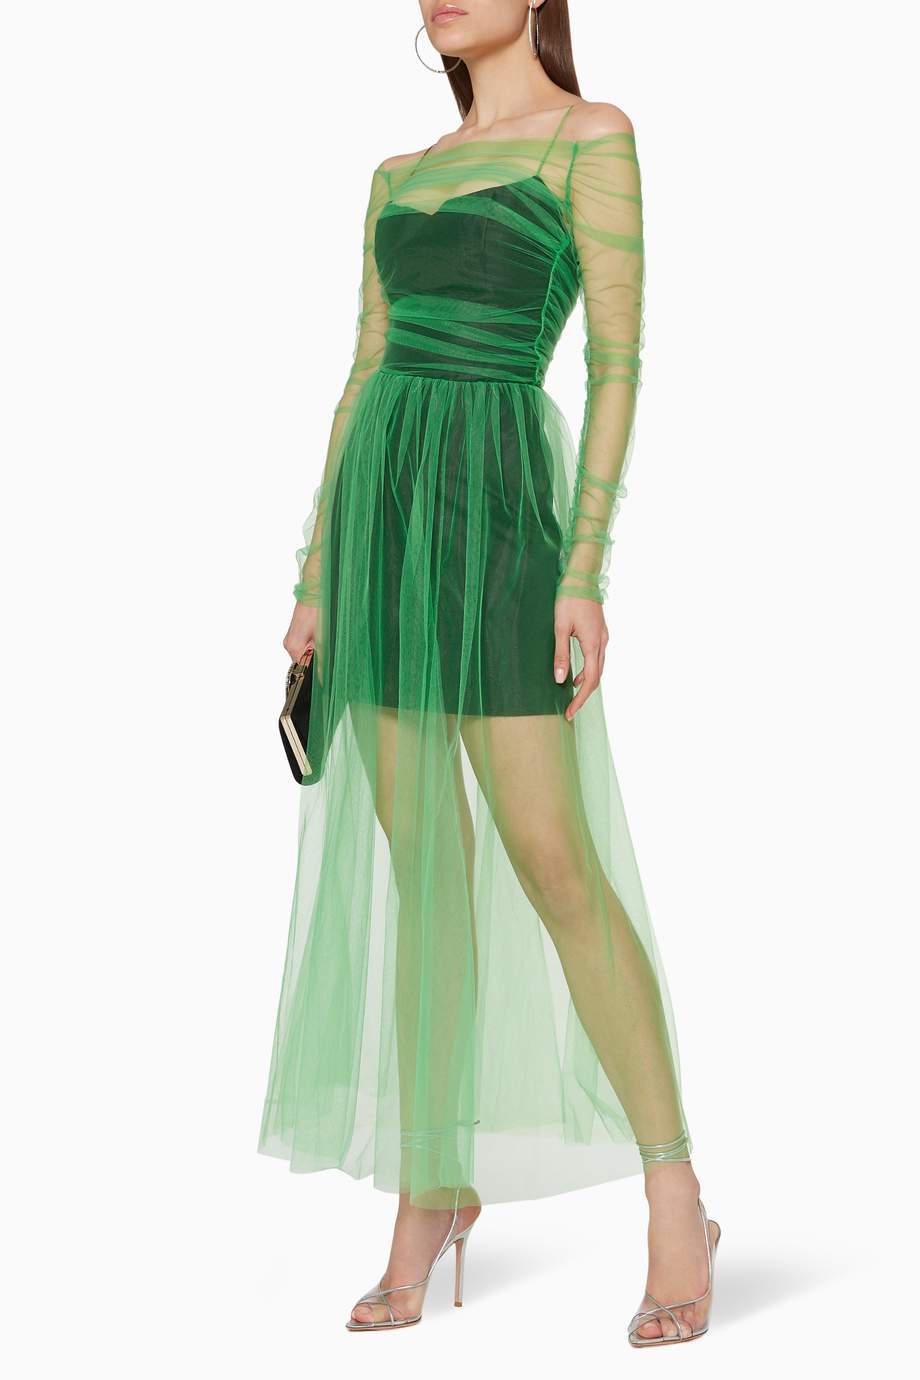 Shop Rasario Green Cold-Shoulder Tulle Maxi Dress for Women | Ounass UAE